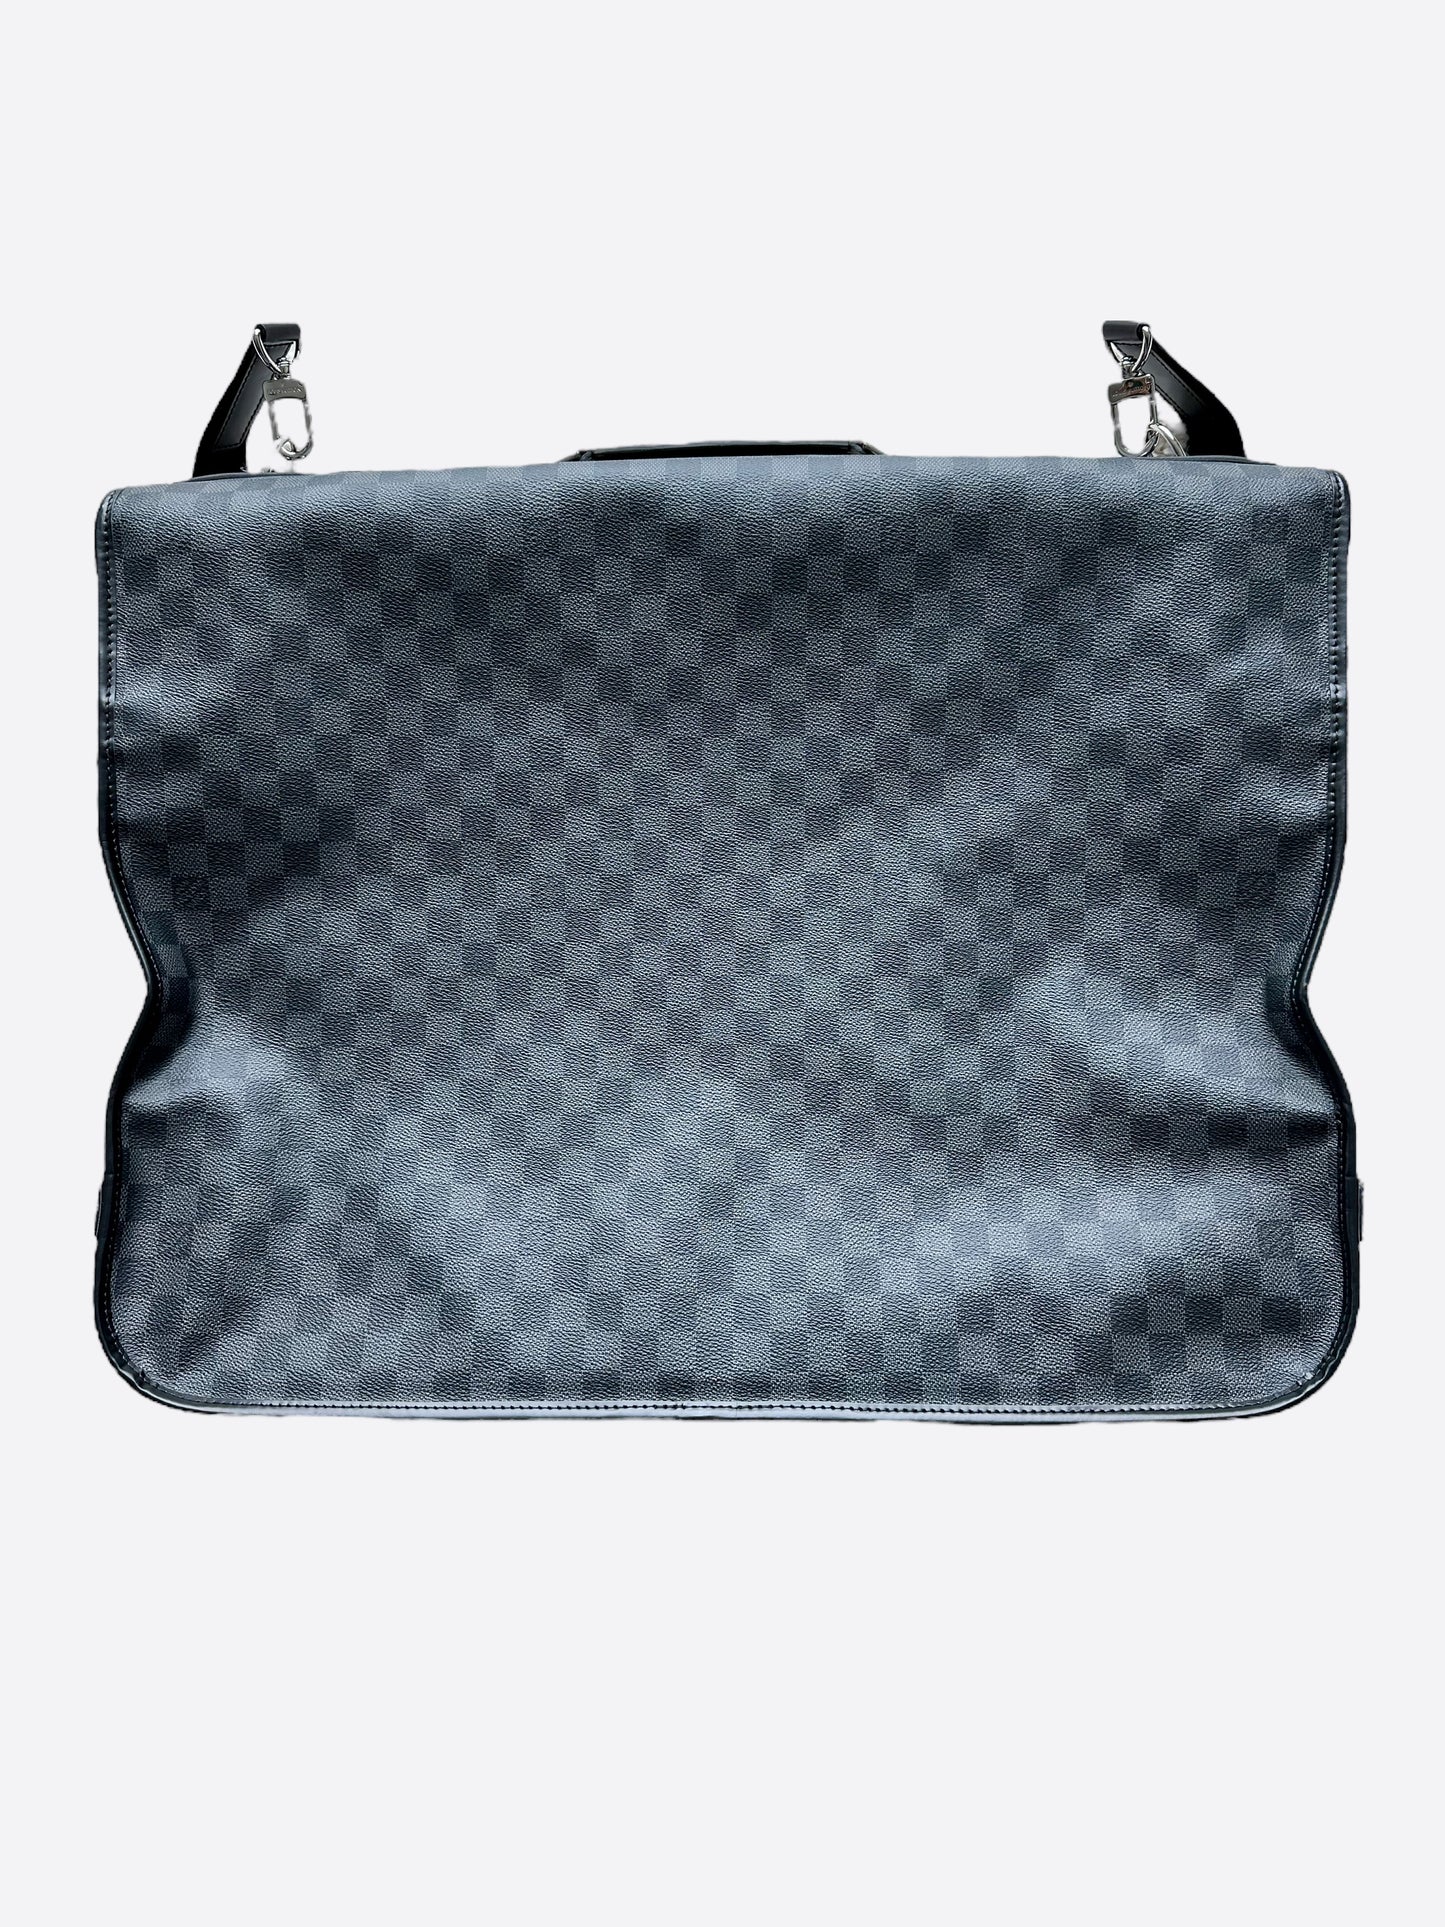 Shop Louis Vuitton DAMIER Garment bag 3 hangers (N41384) by